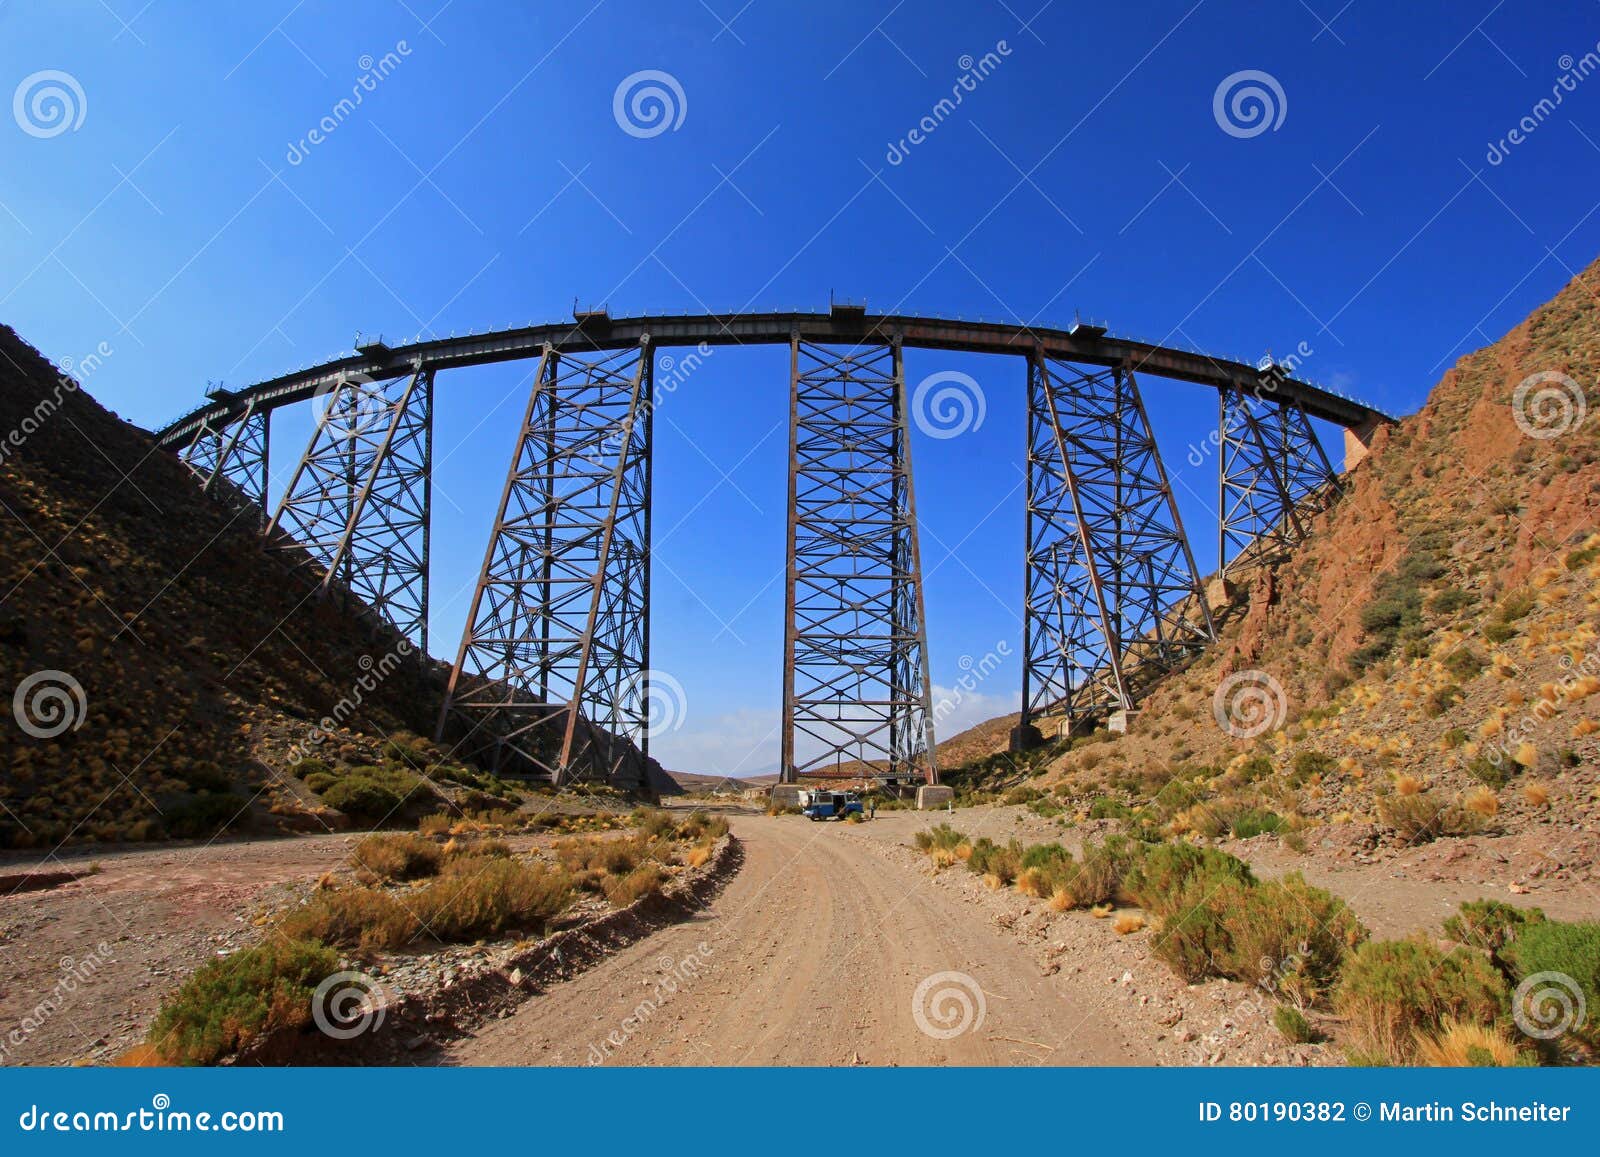 la polvorilla viaduct, tren a las nubes, northwest of argentina